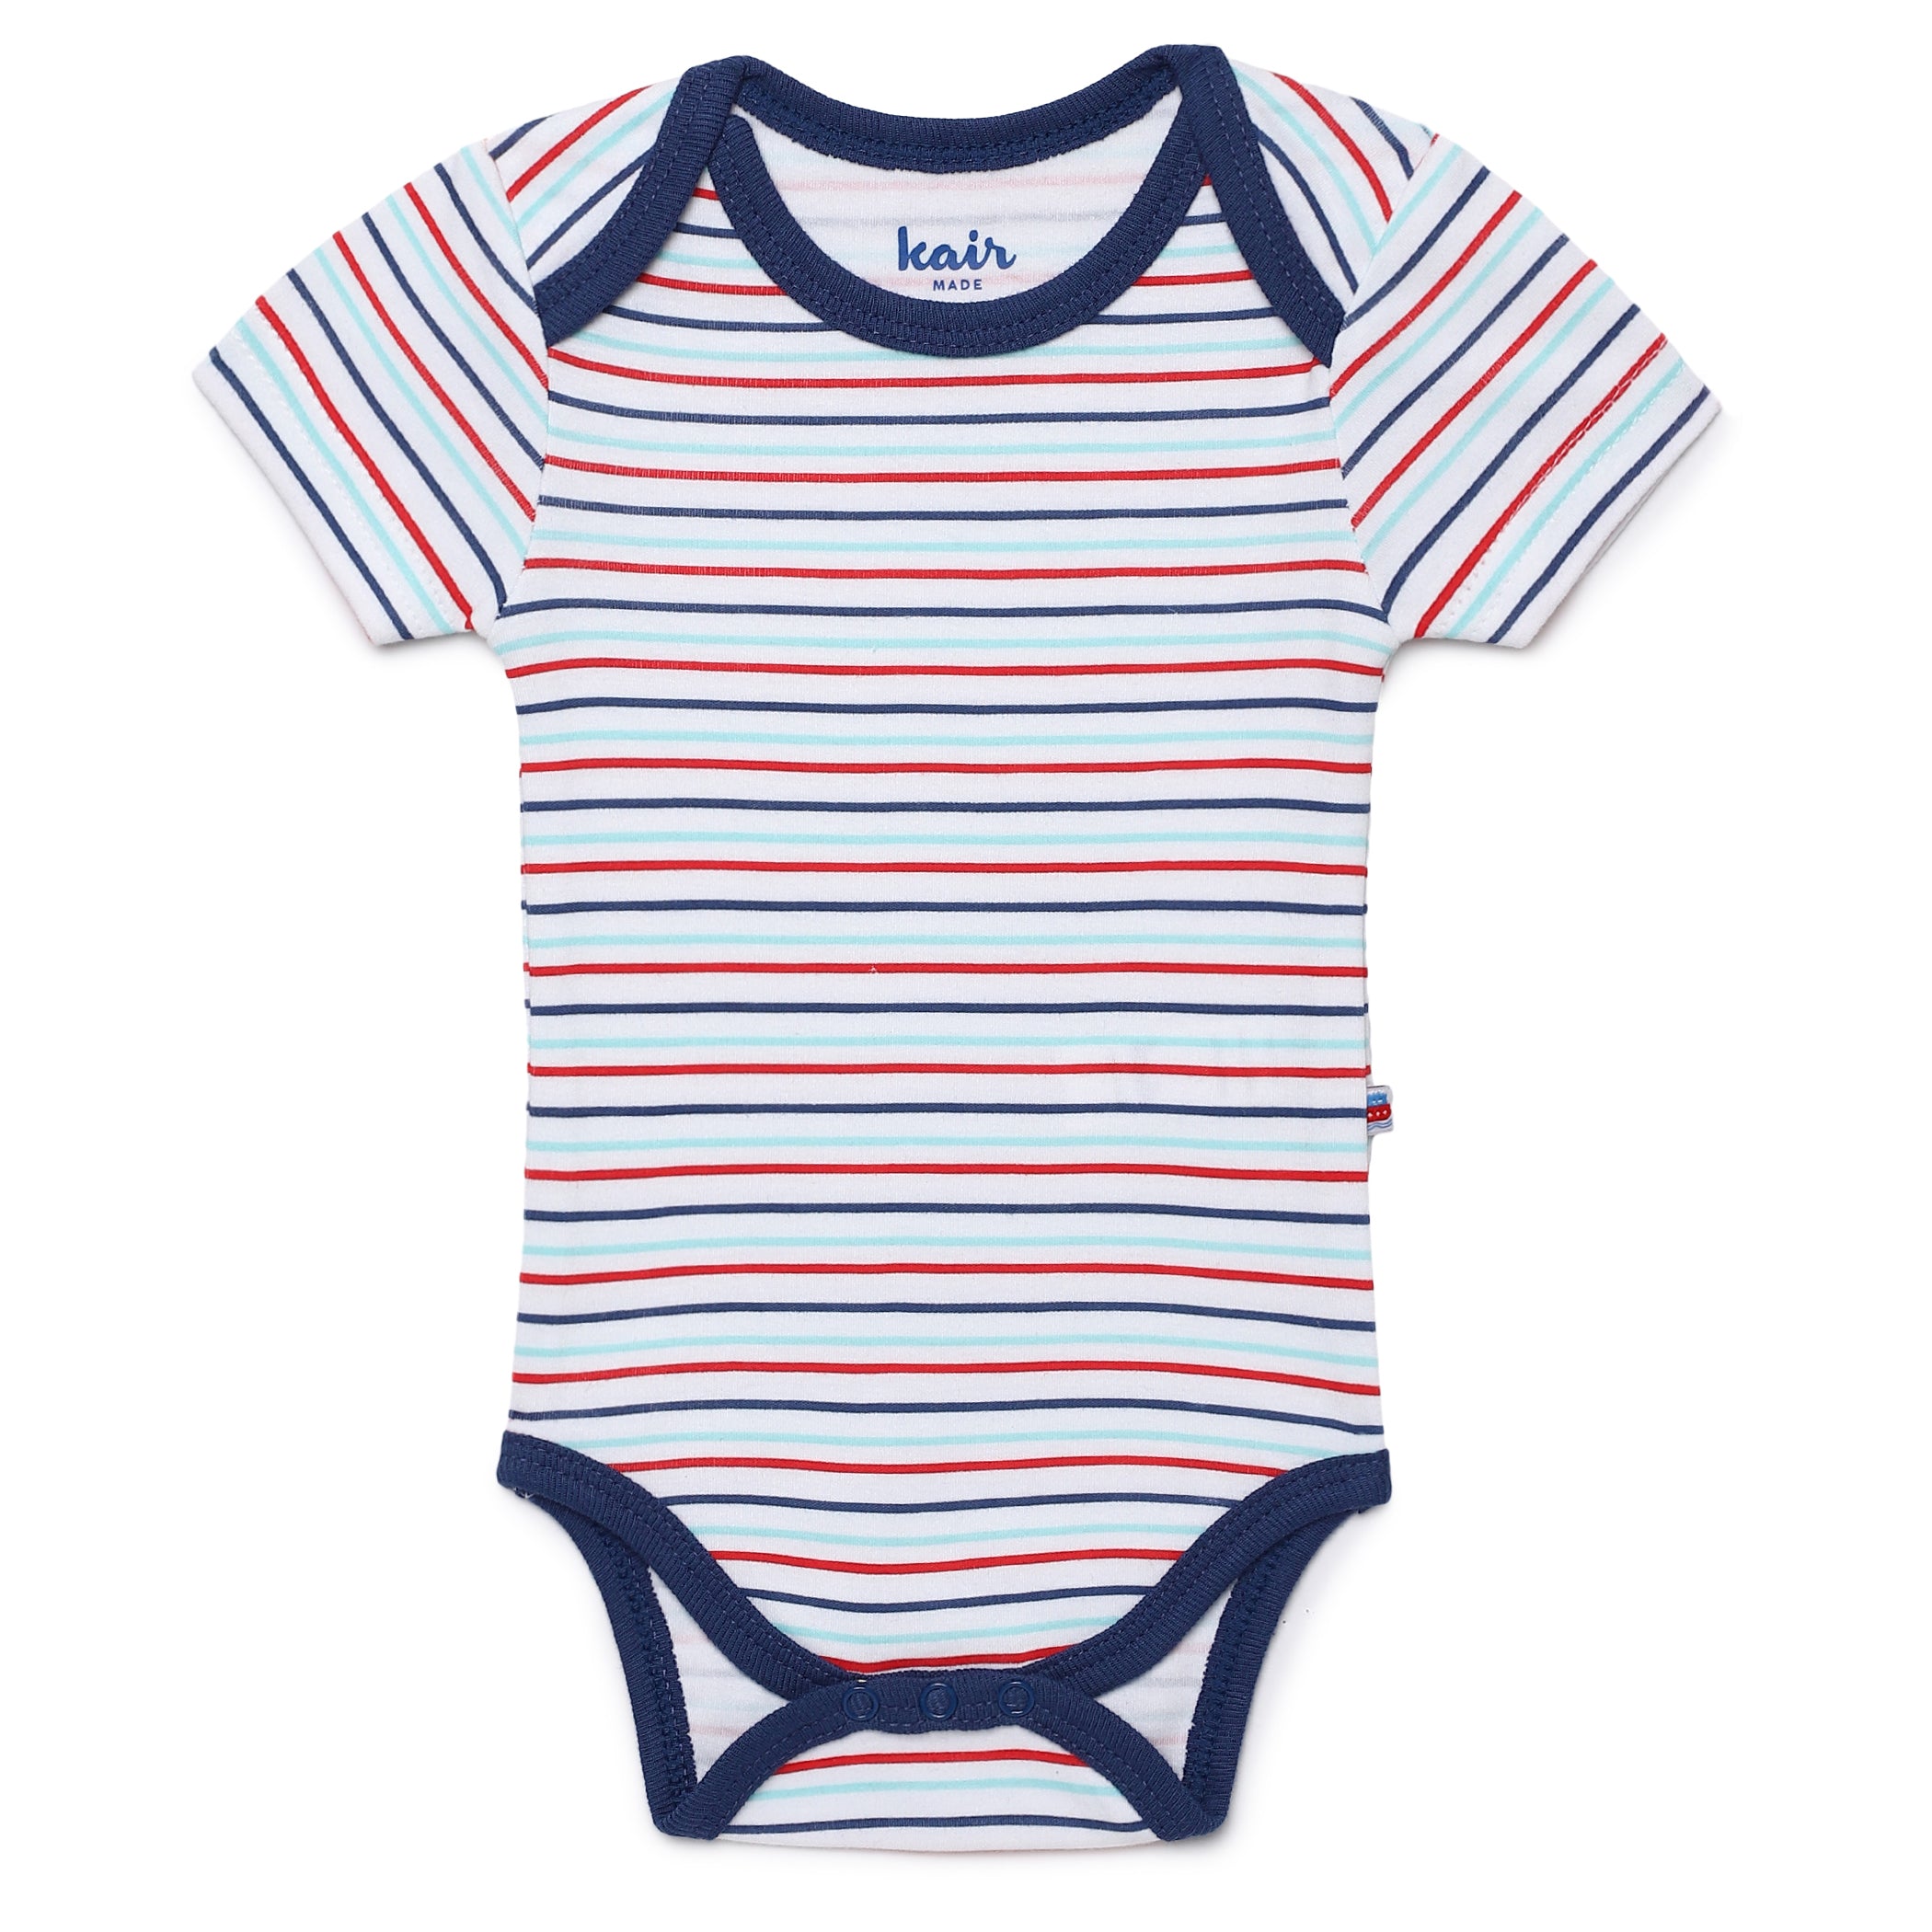 Baby Essentials Half Sleeve Bodysuit